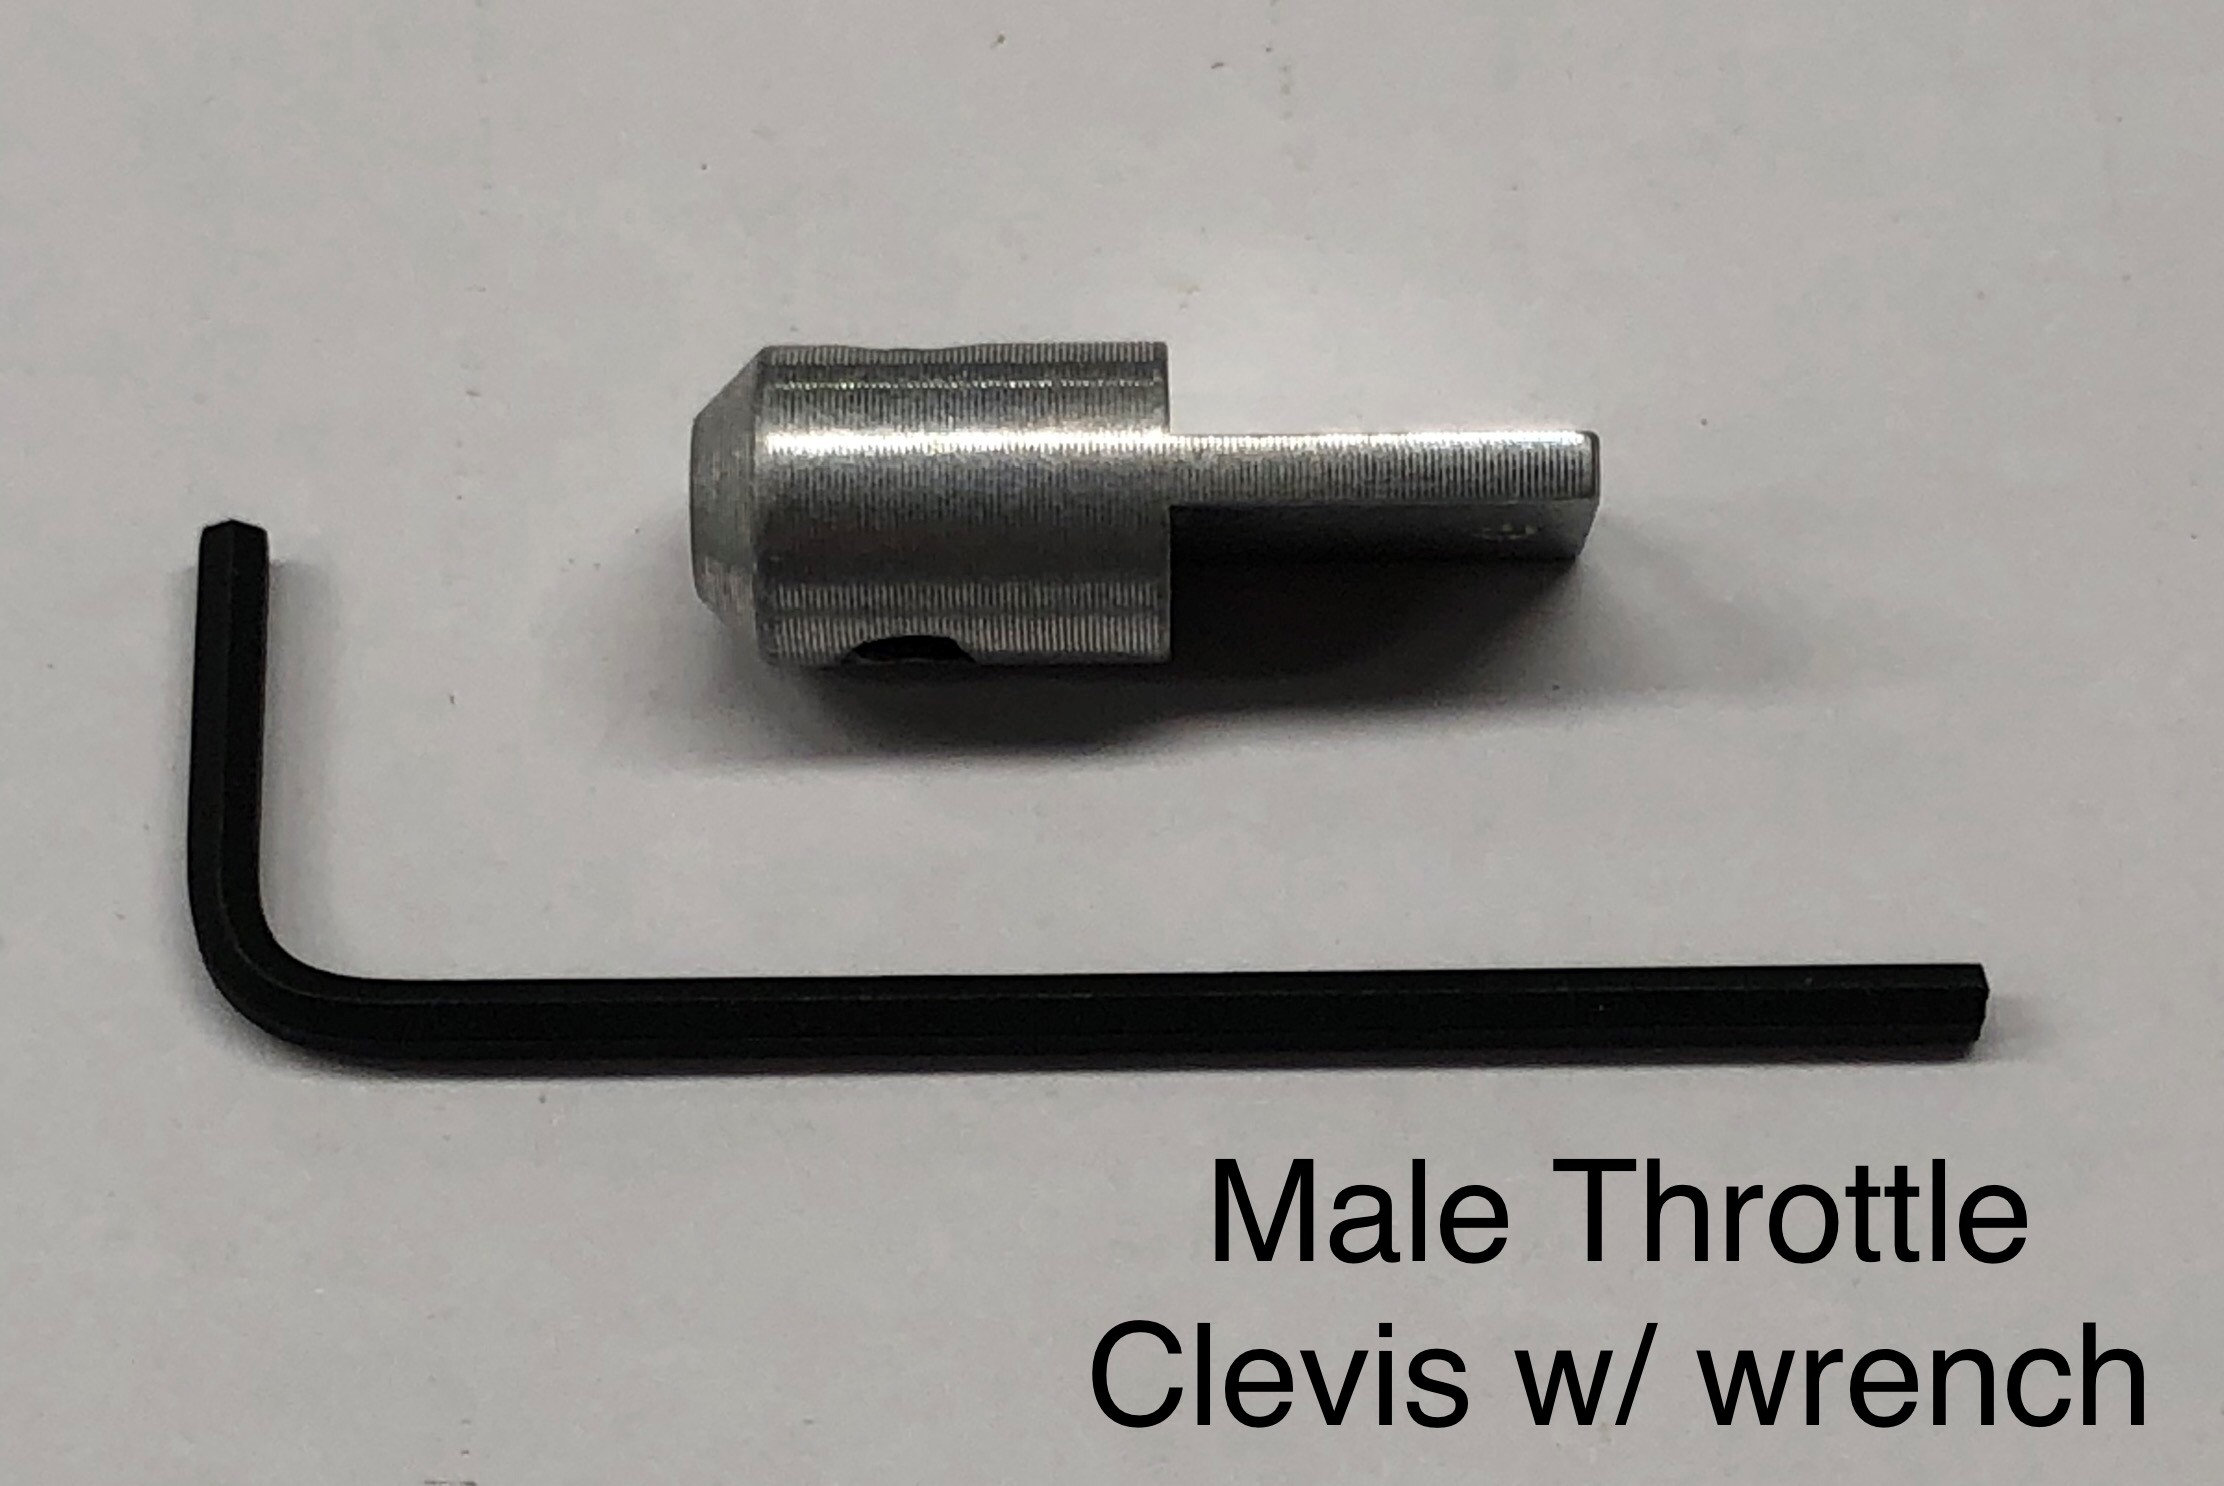 Male Throttle Clevis